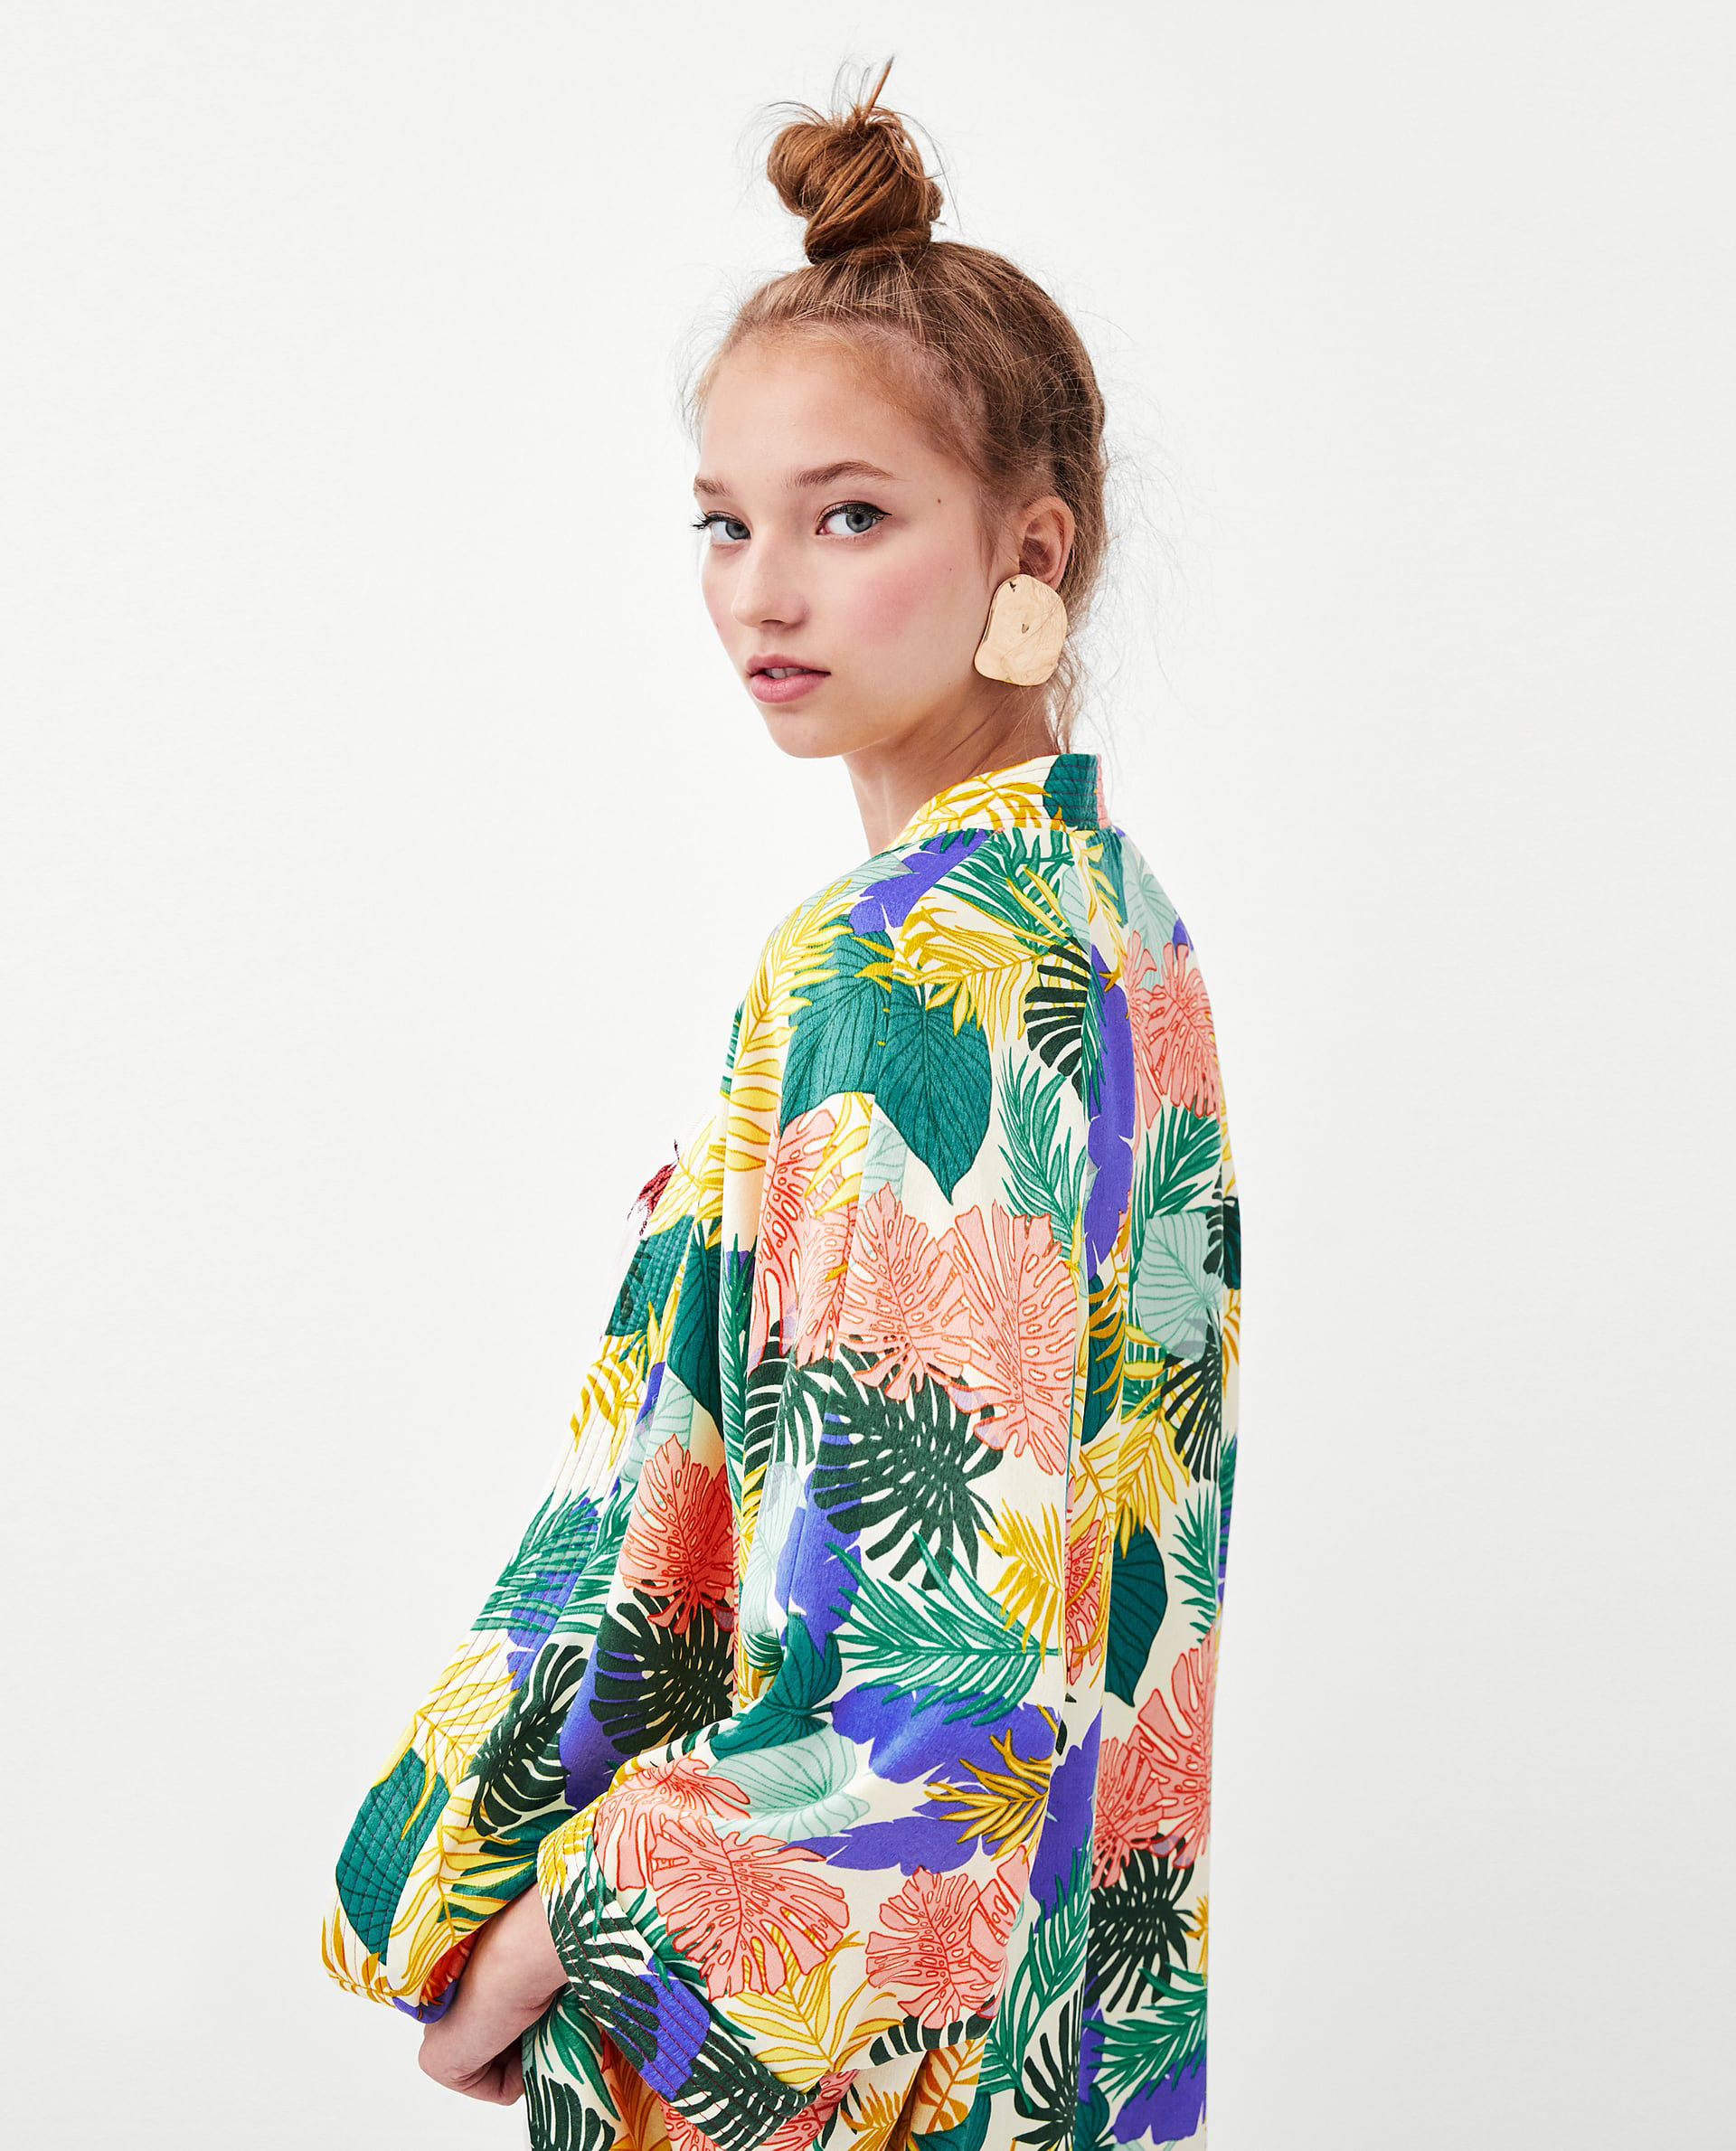 Tropical Print for Zara TRF on Behance